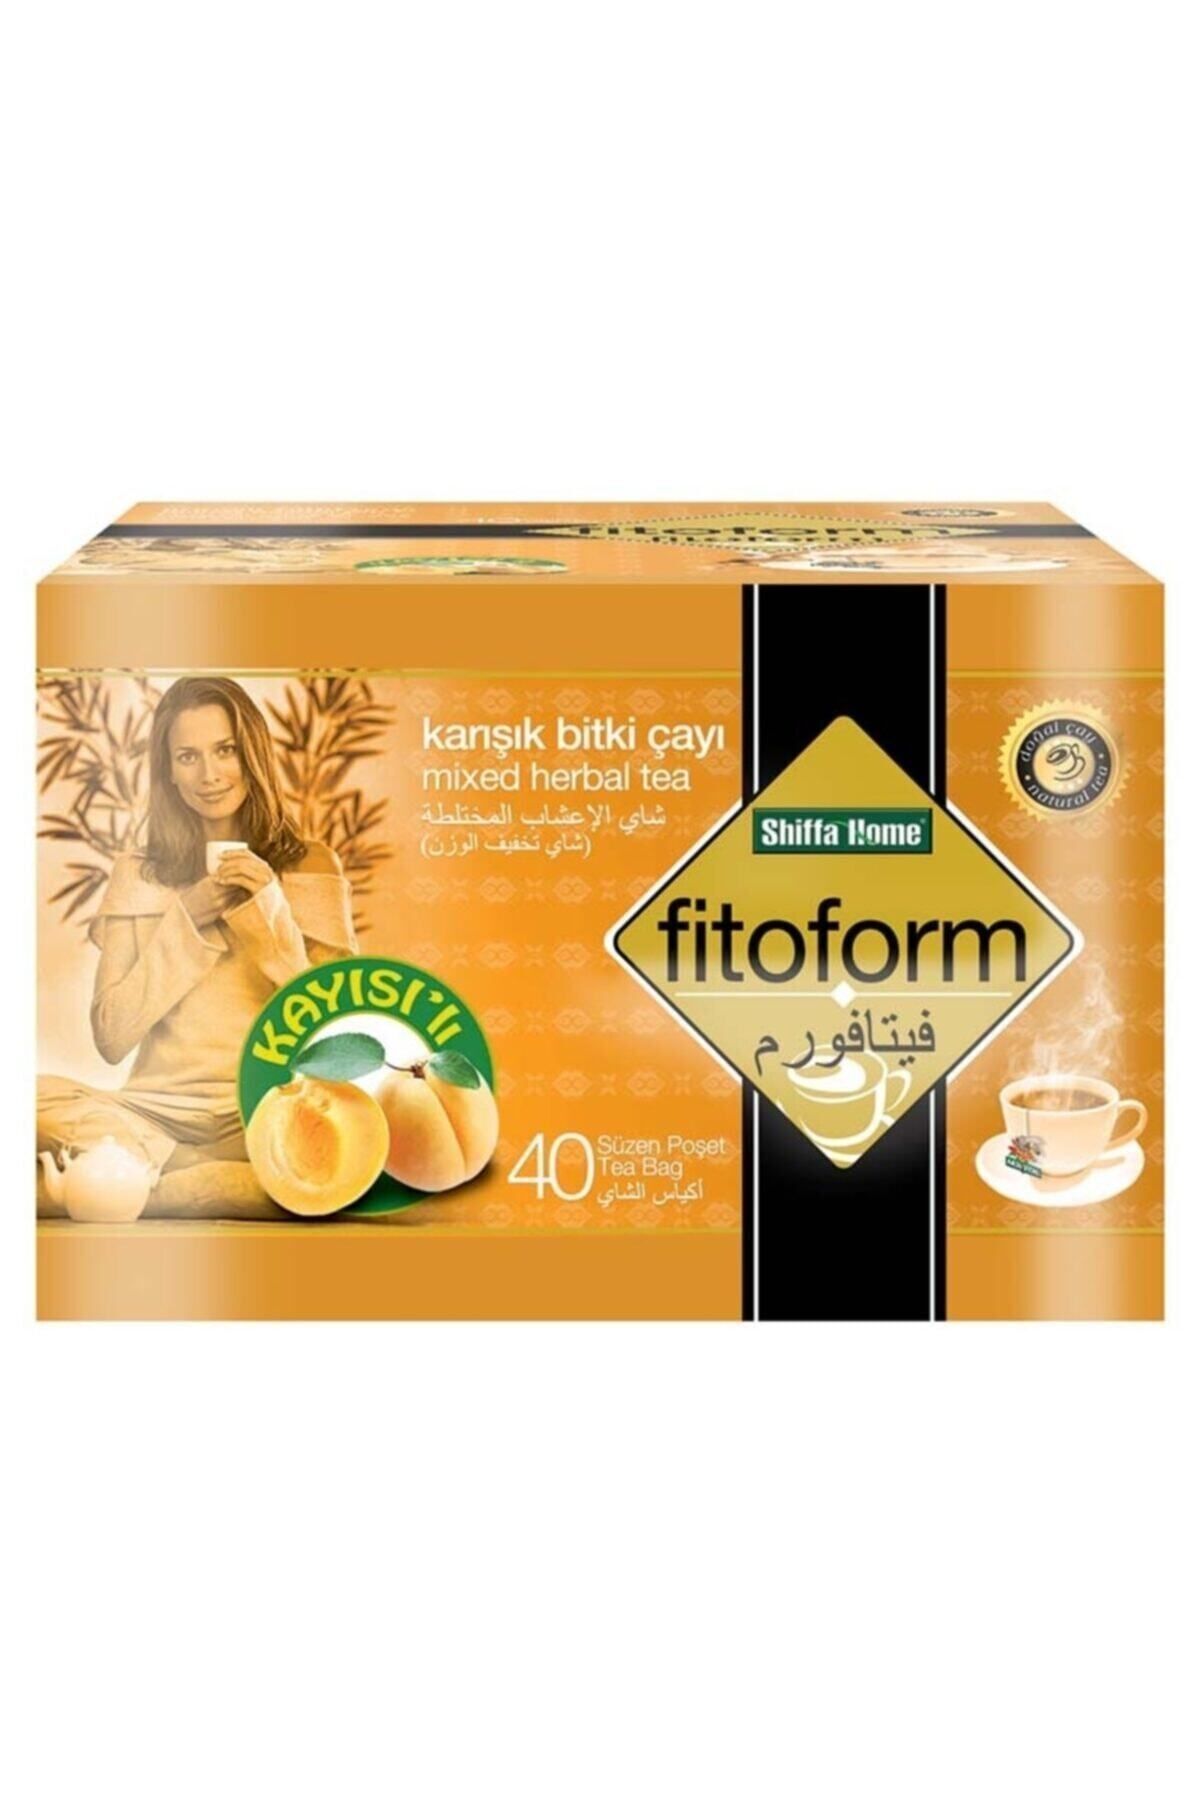 Maraş Yöresel Shiffa Home Fitoform Karışık Bitki Çayı 40 Lı Paket